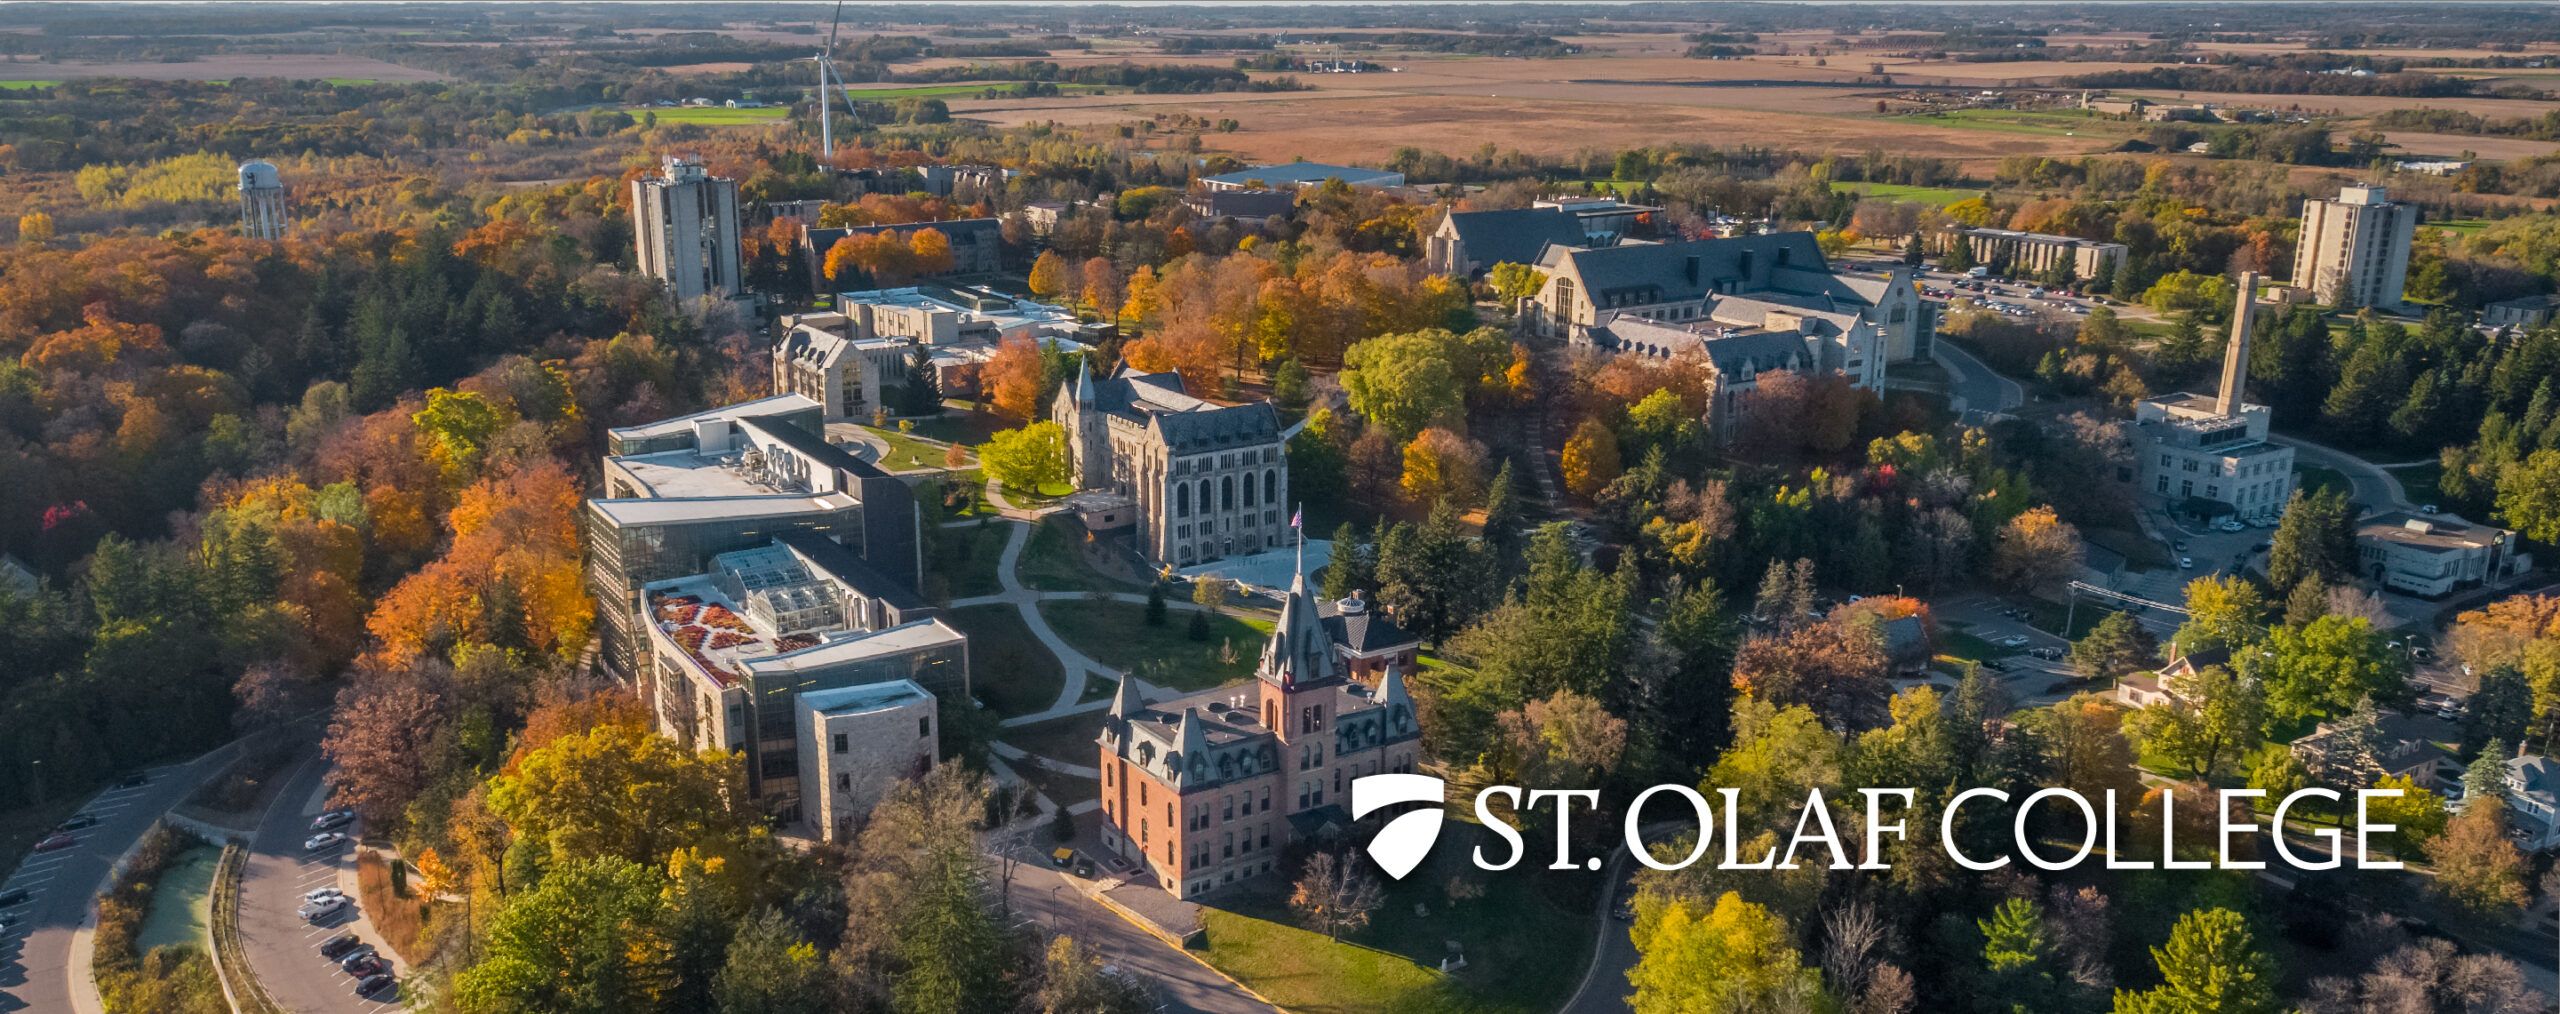 St.Olaf college обучение и степендии